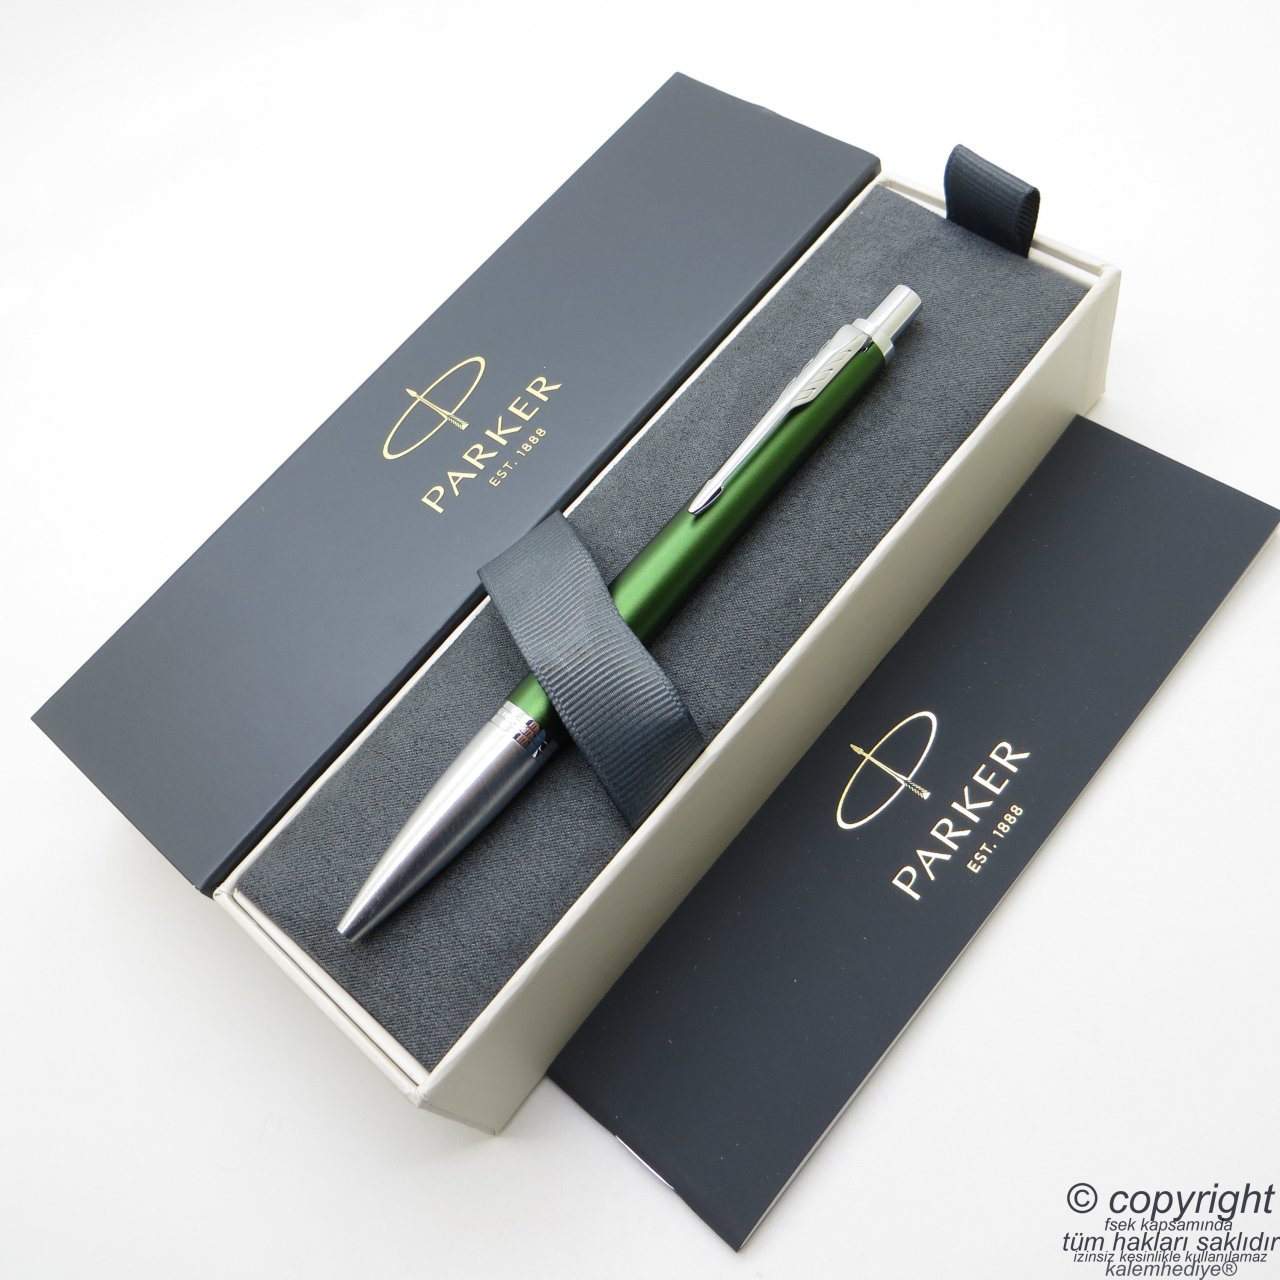 Parker Urban Premium Yeşil Tükenmez Kalem | İsme Özel Kalem